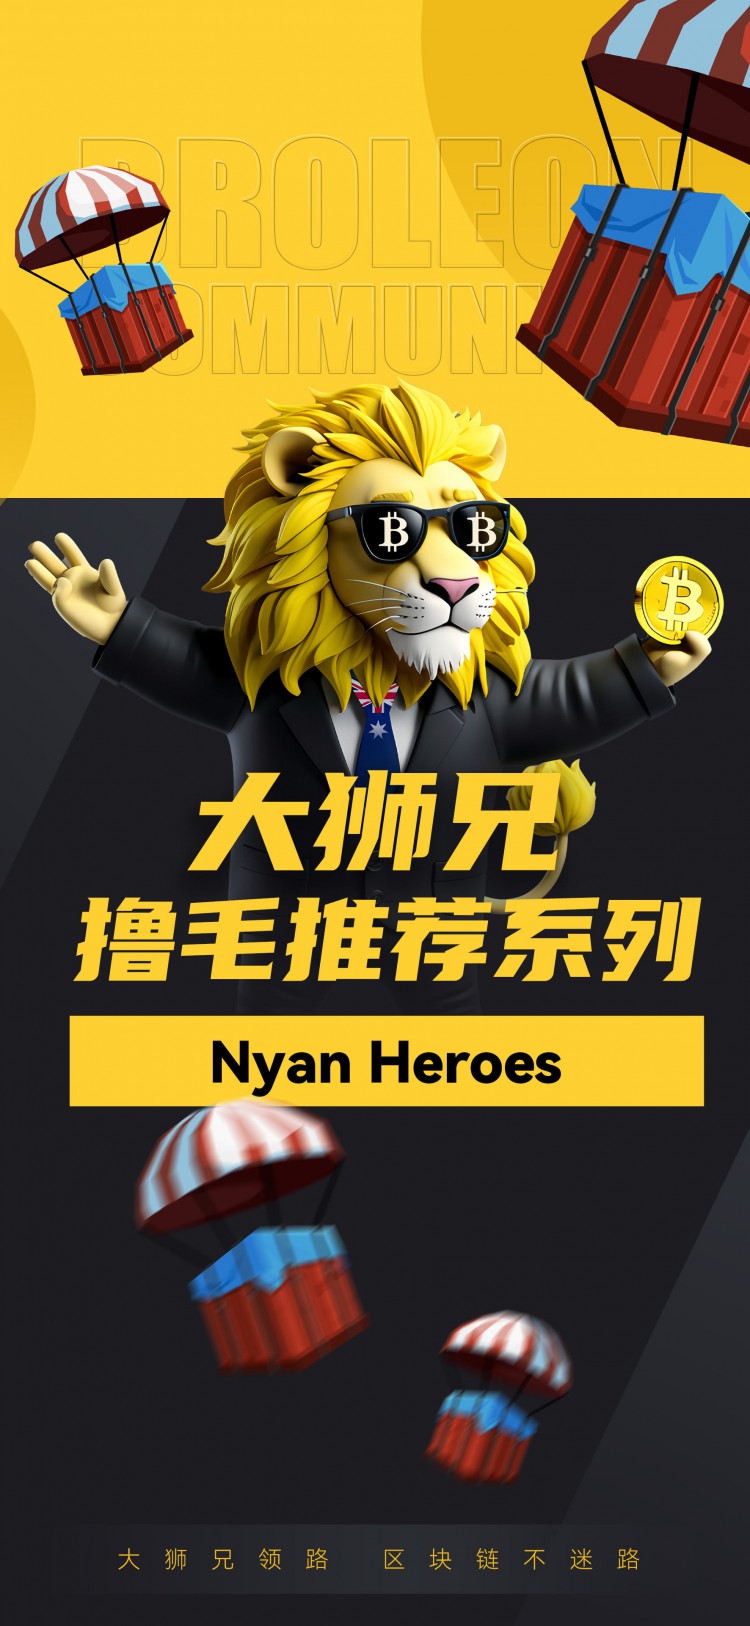 Nyan Heroes空投推薦 此優盛項目即將發行硬幣 讓您輕鬆獲得$NYAN代幣 推薦碼:BroL